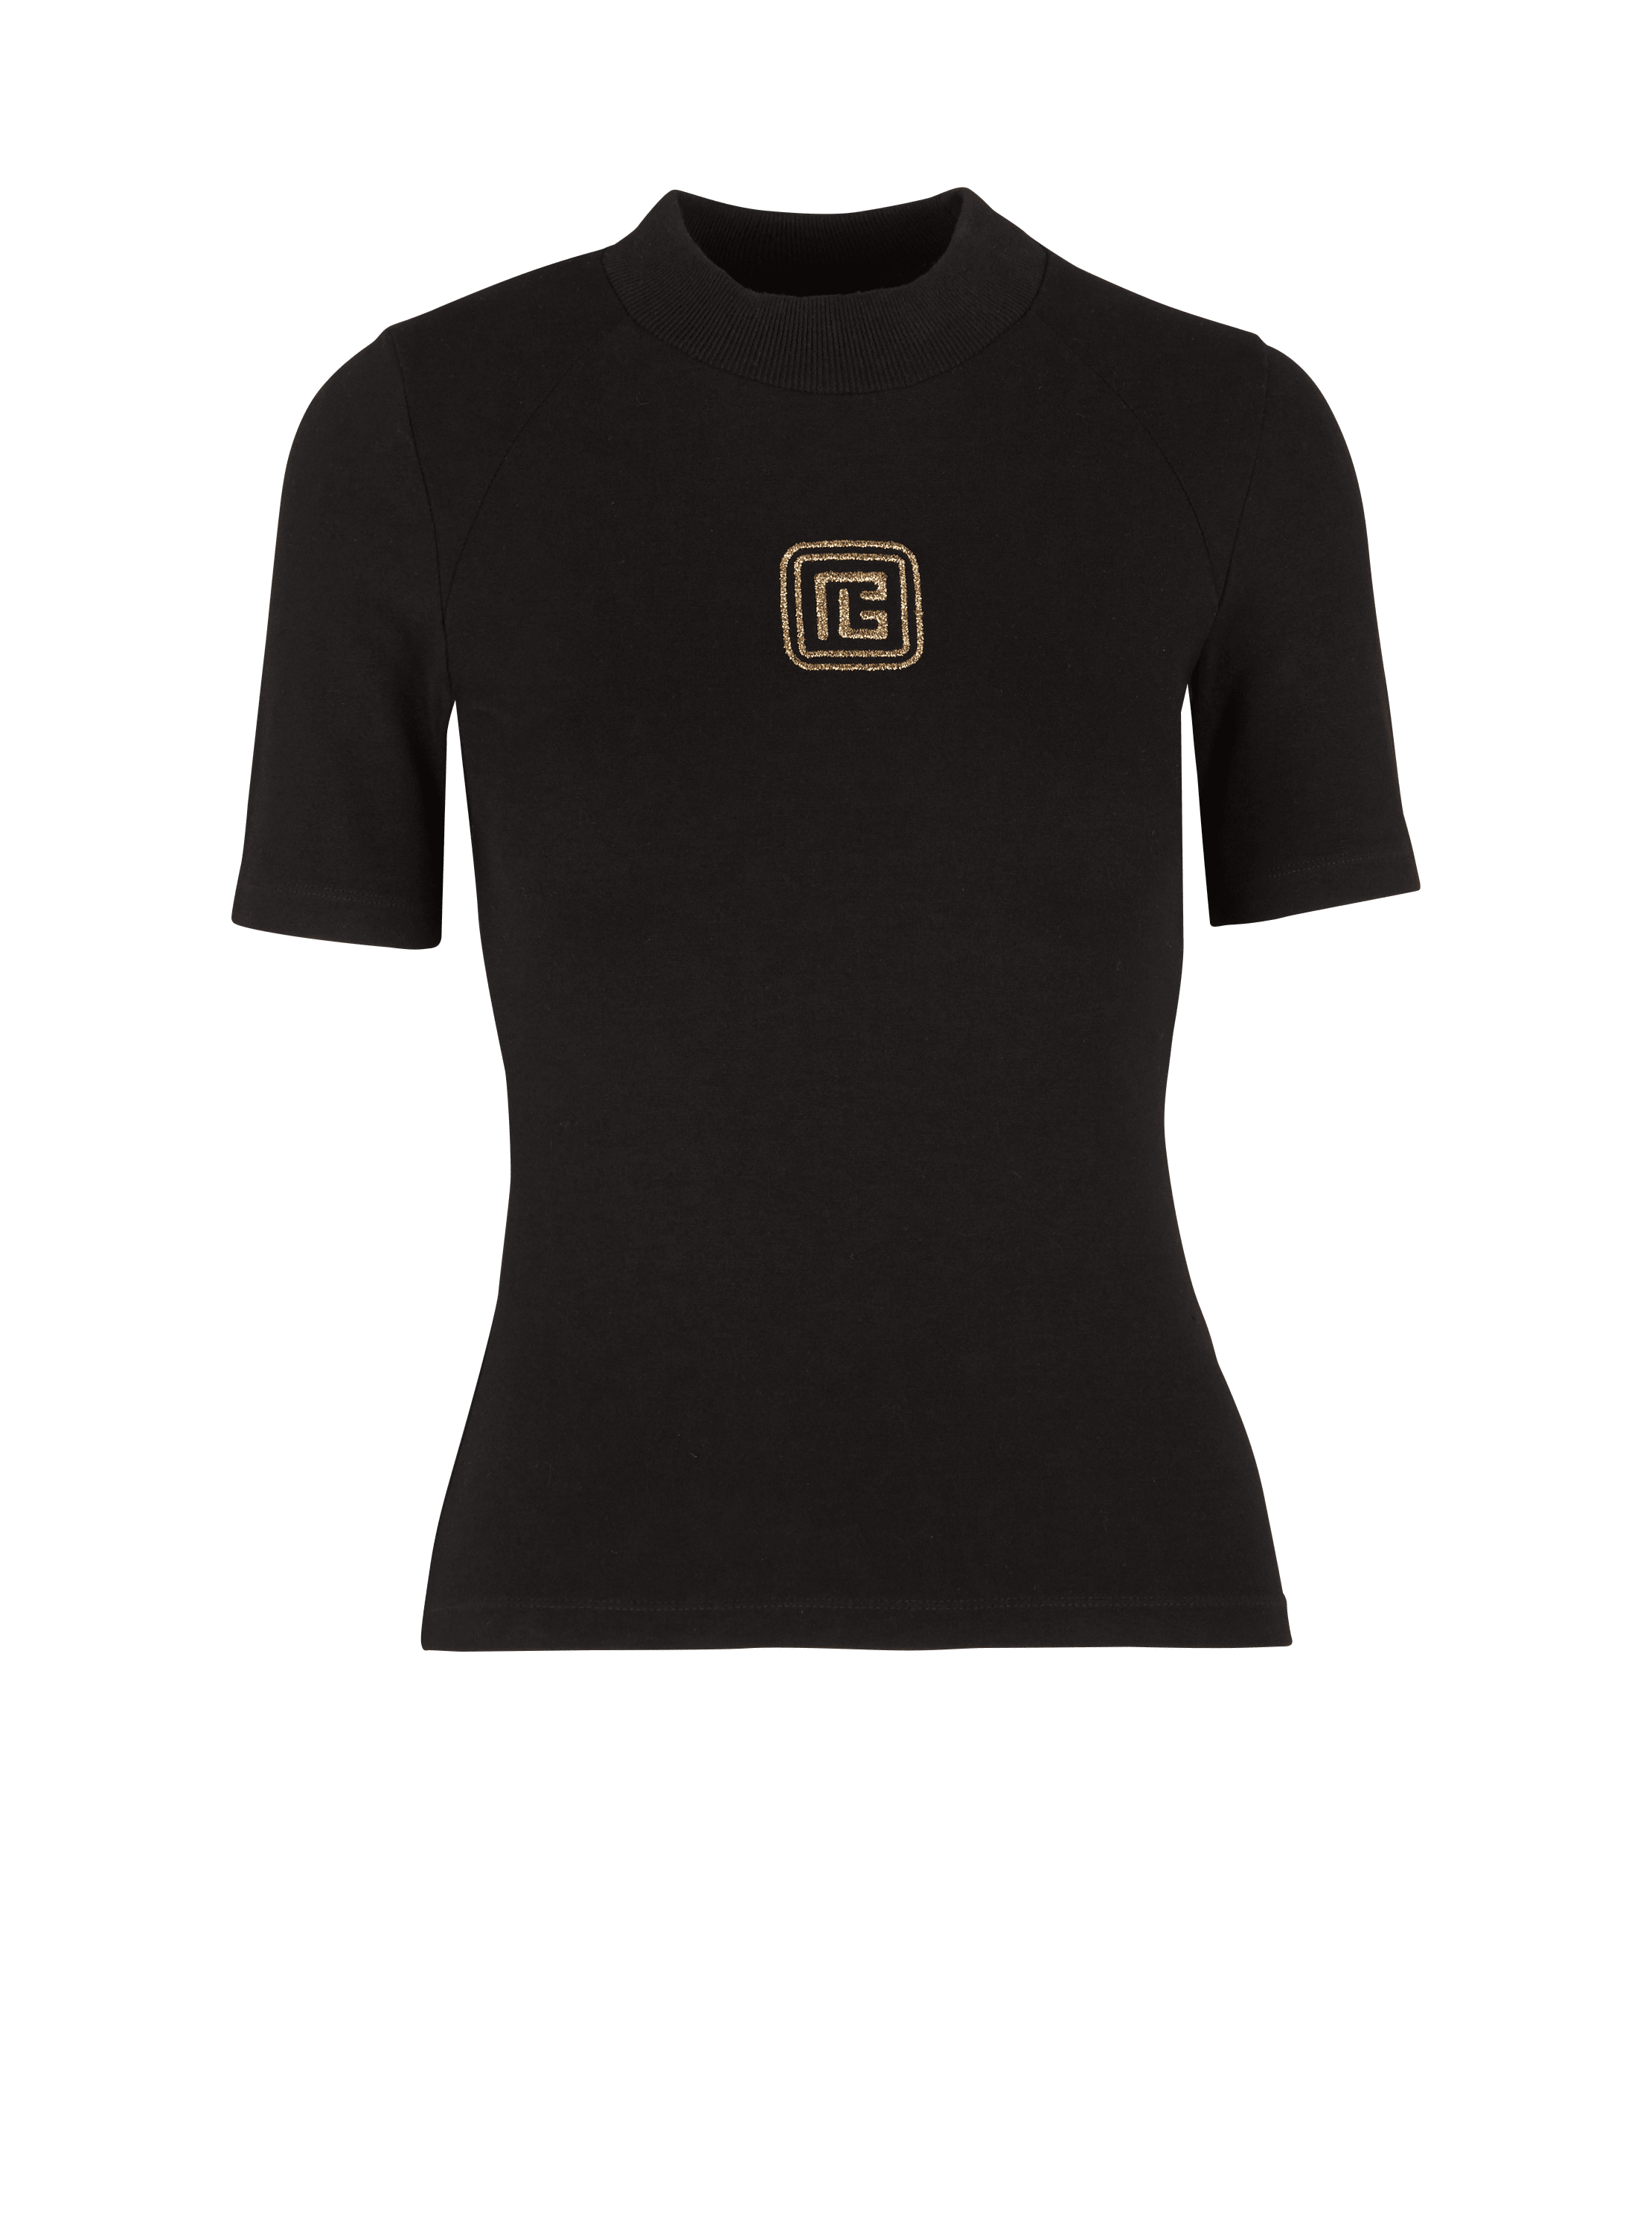 PB Retro T-shirt